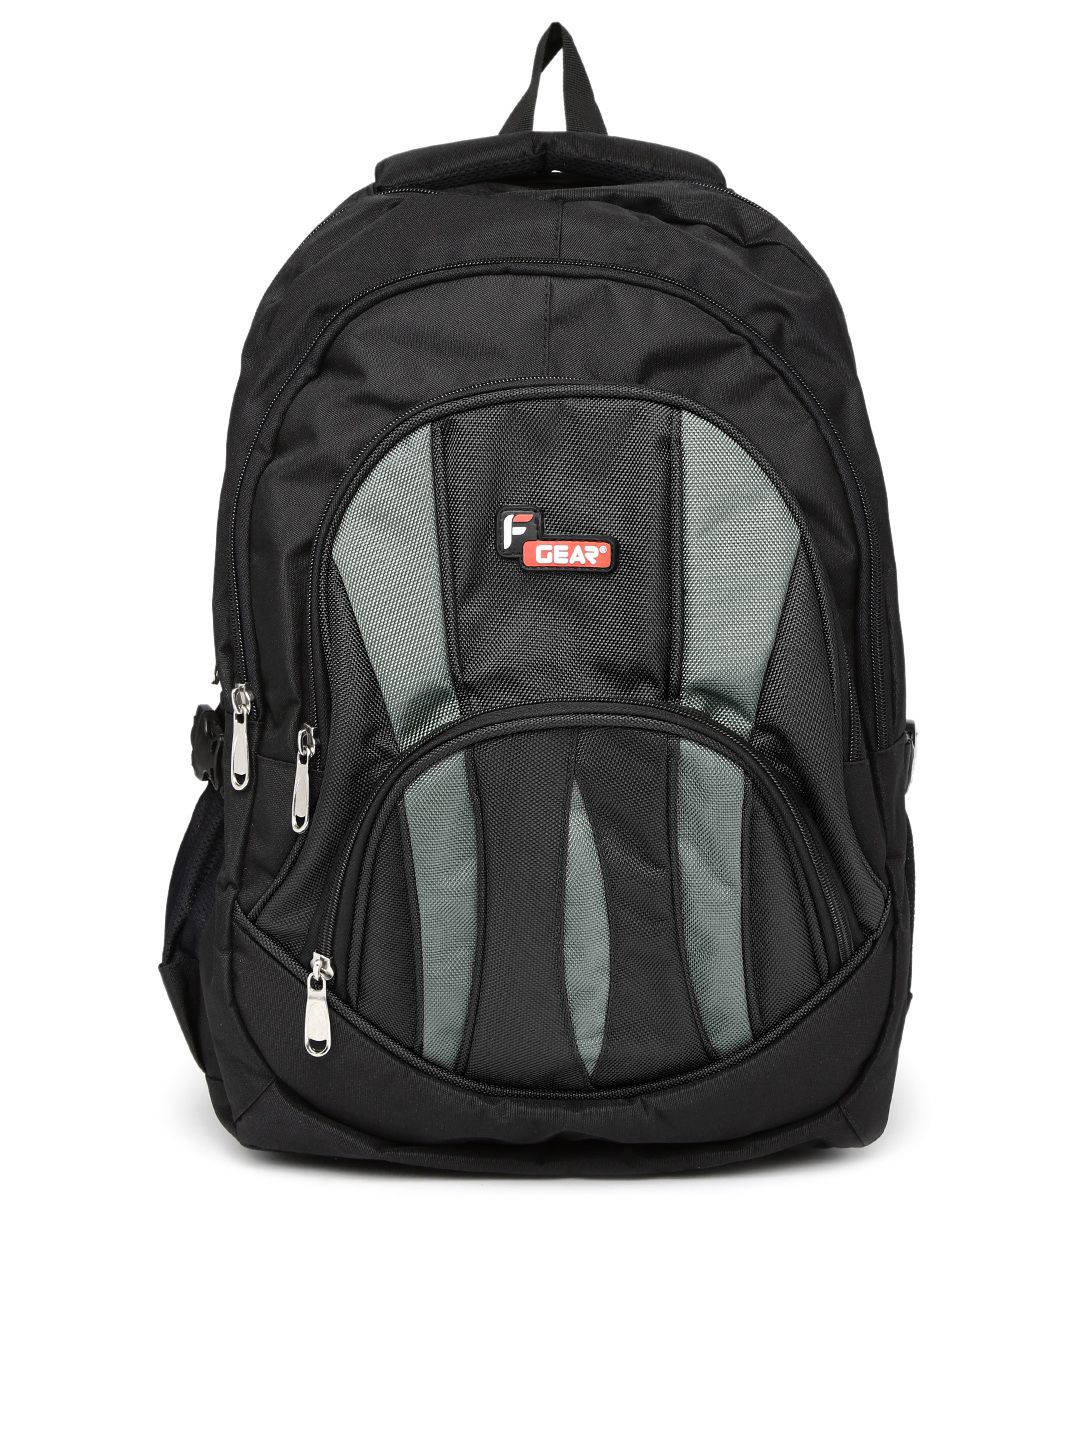 F Gear Unisex Black & Grey Adios Backpack Price in India